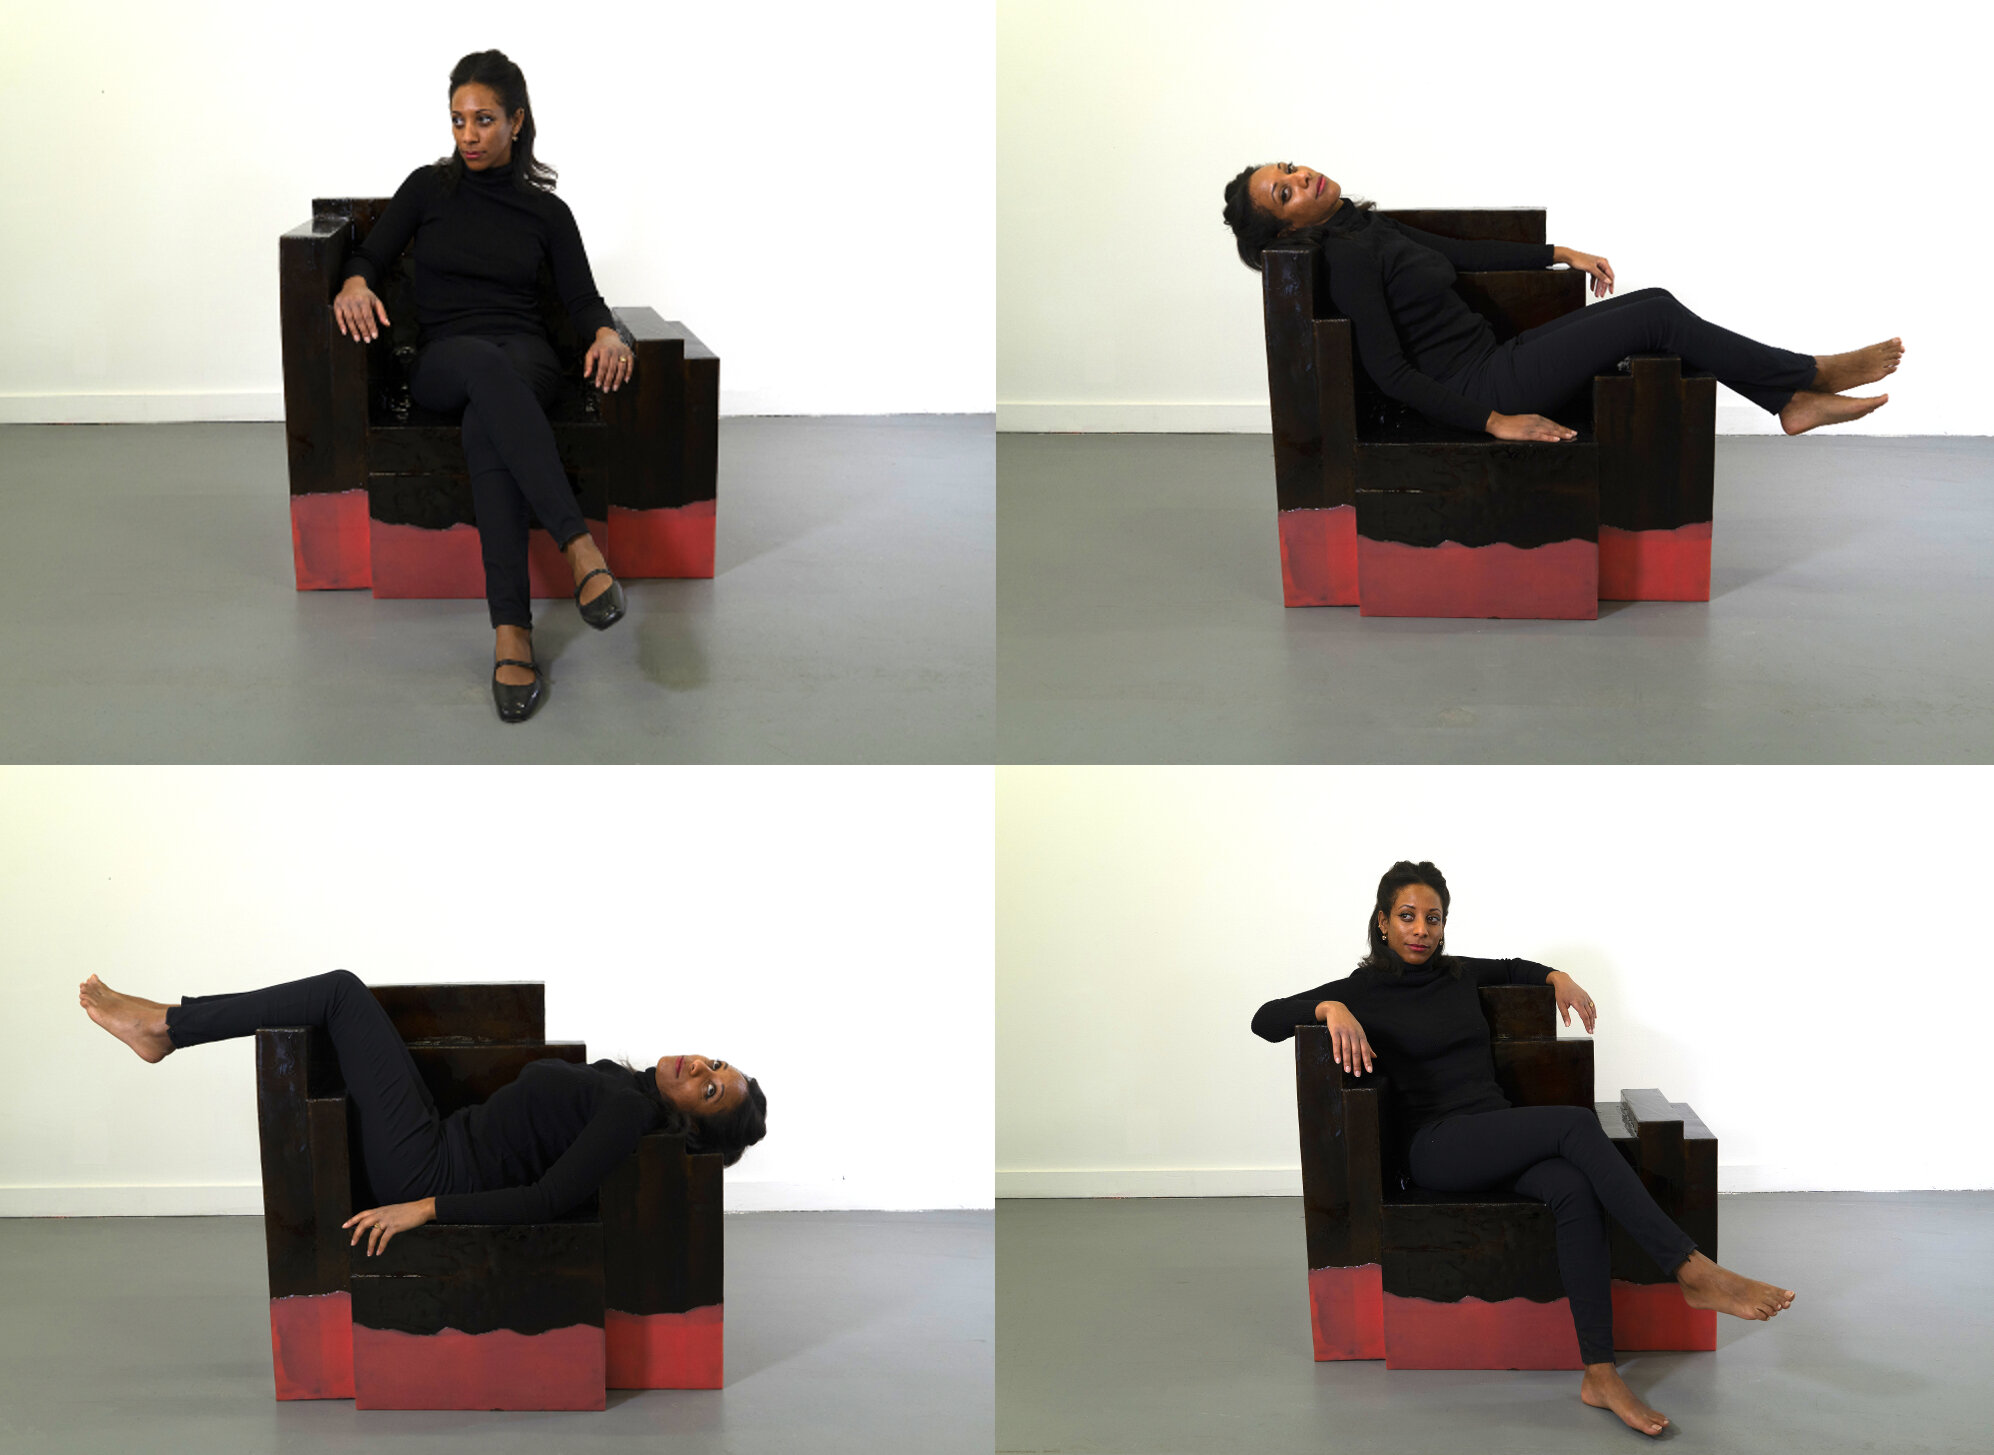 Luam Melake's Foam Furniture Wants to Bring People Back Together